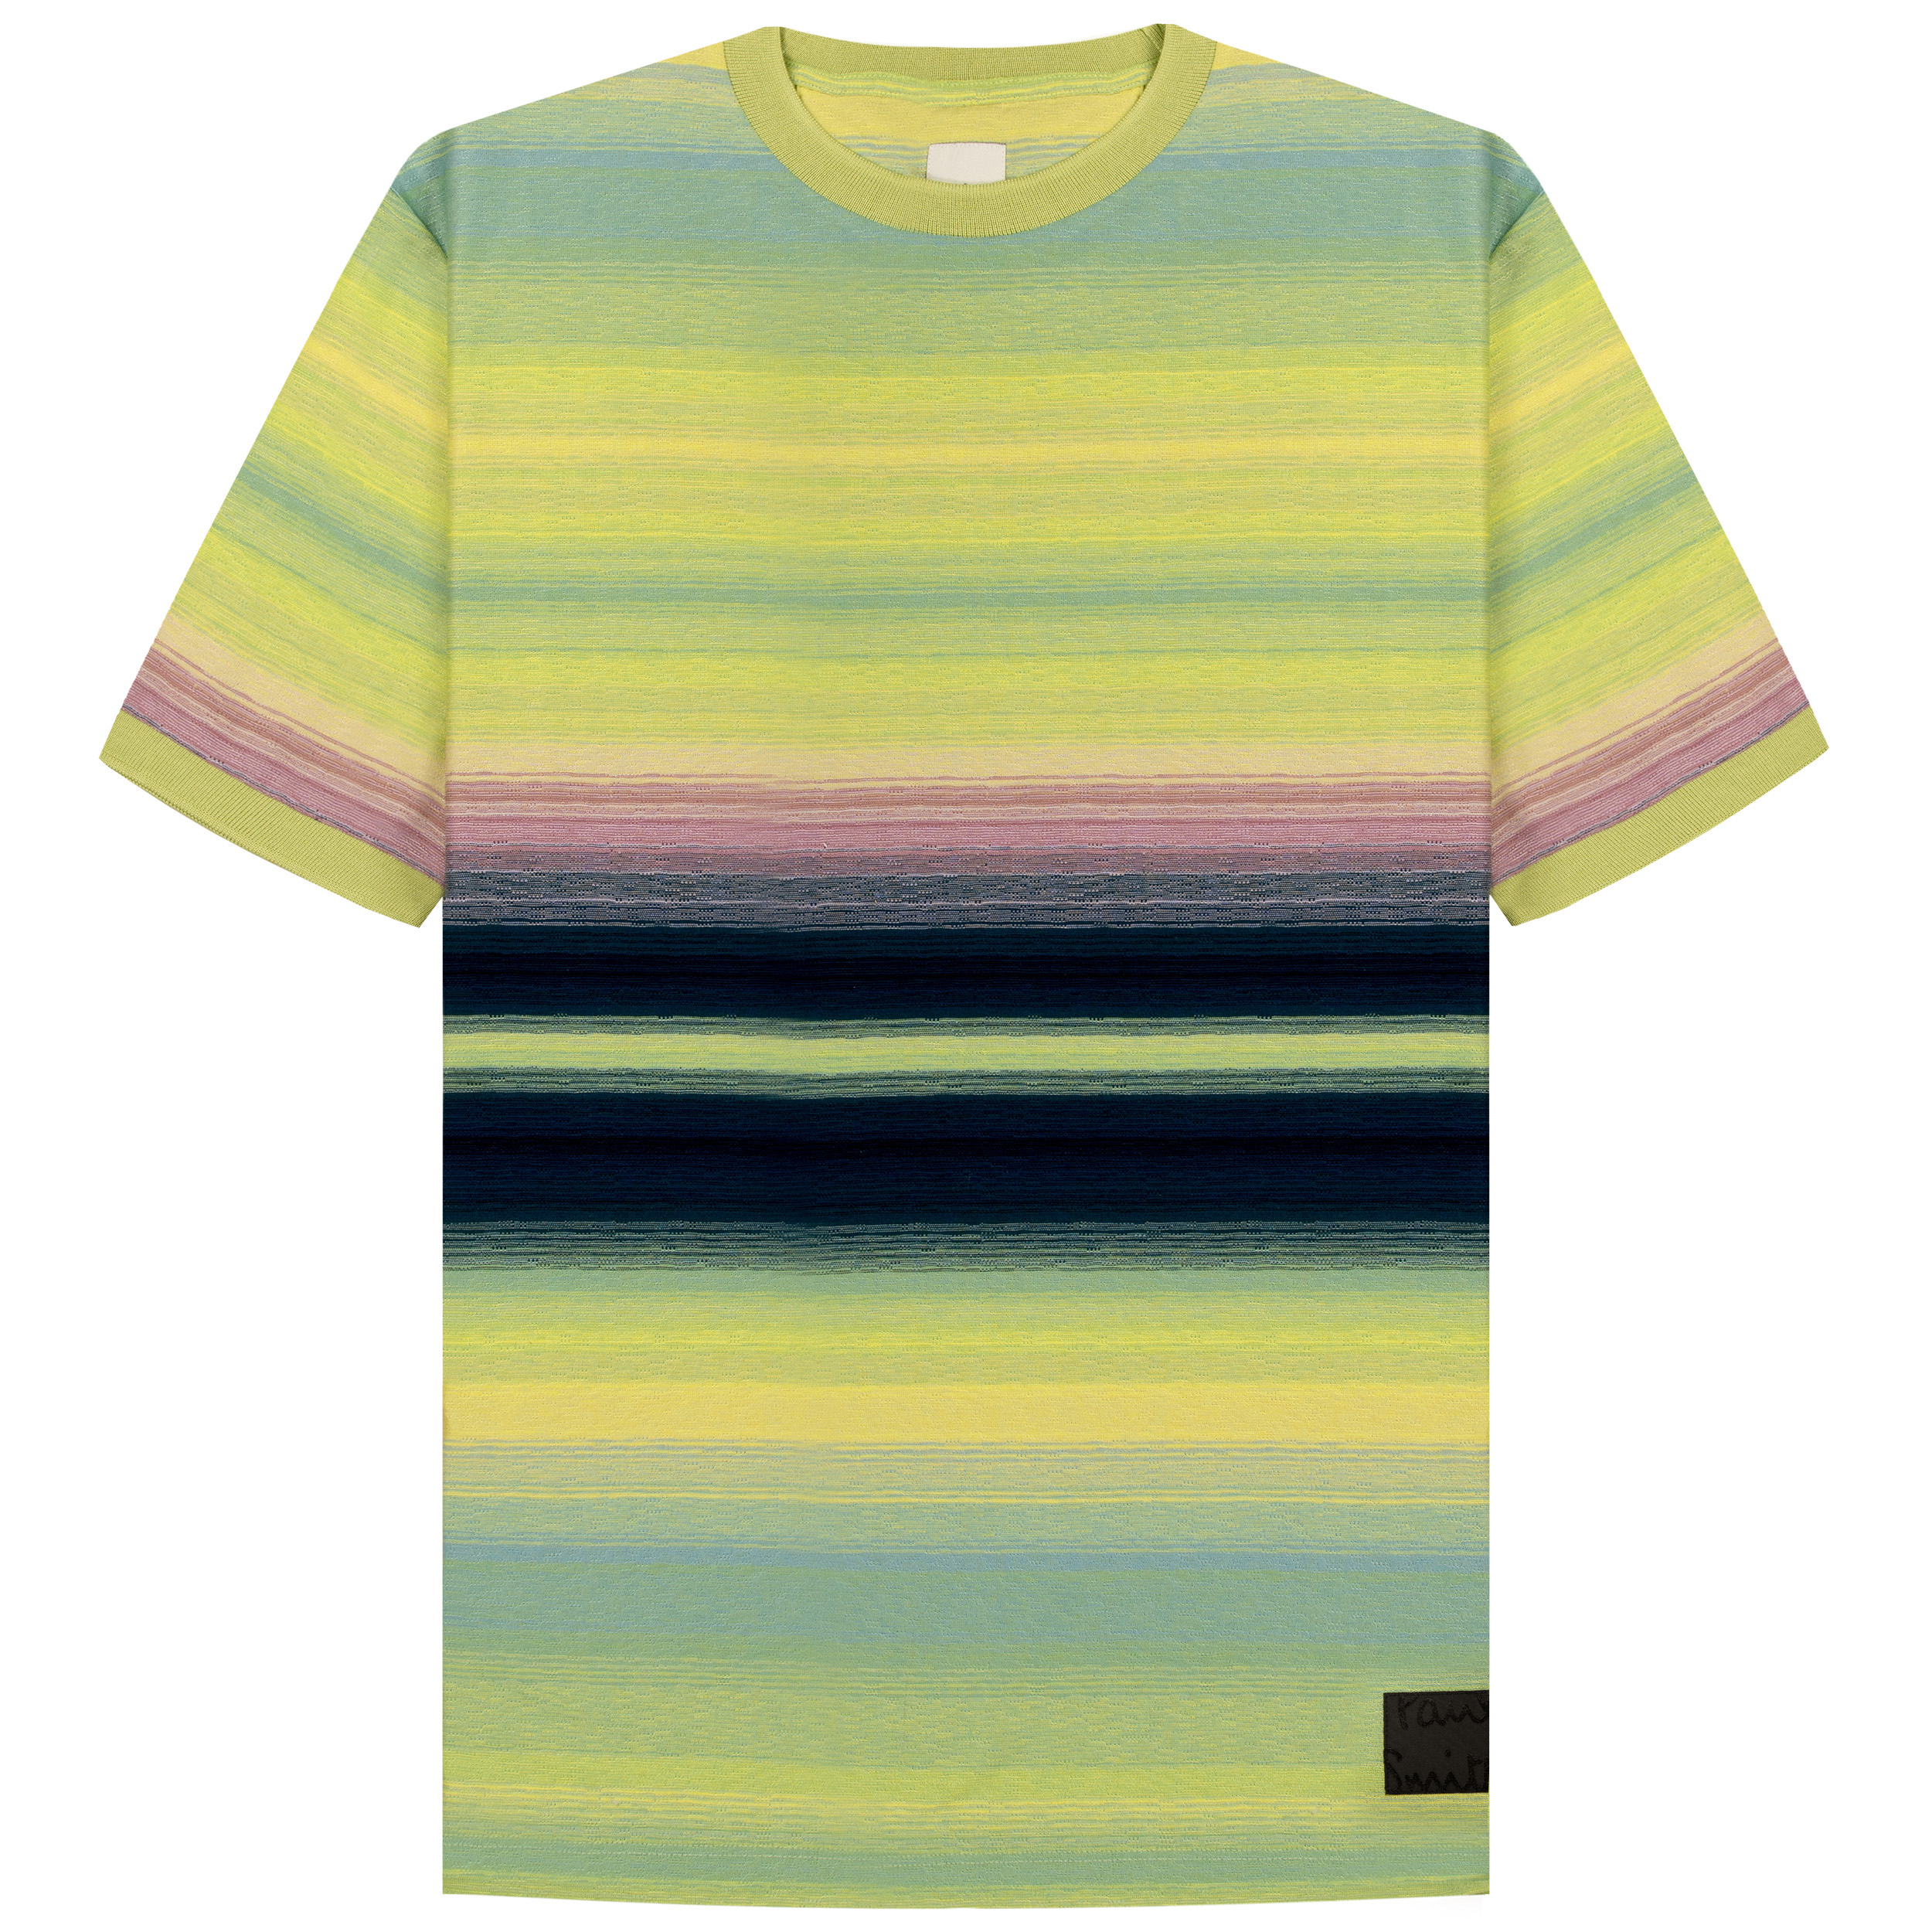 Paul Smith Stripe SS T-Shirt Acid Yellow